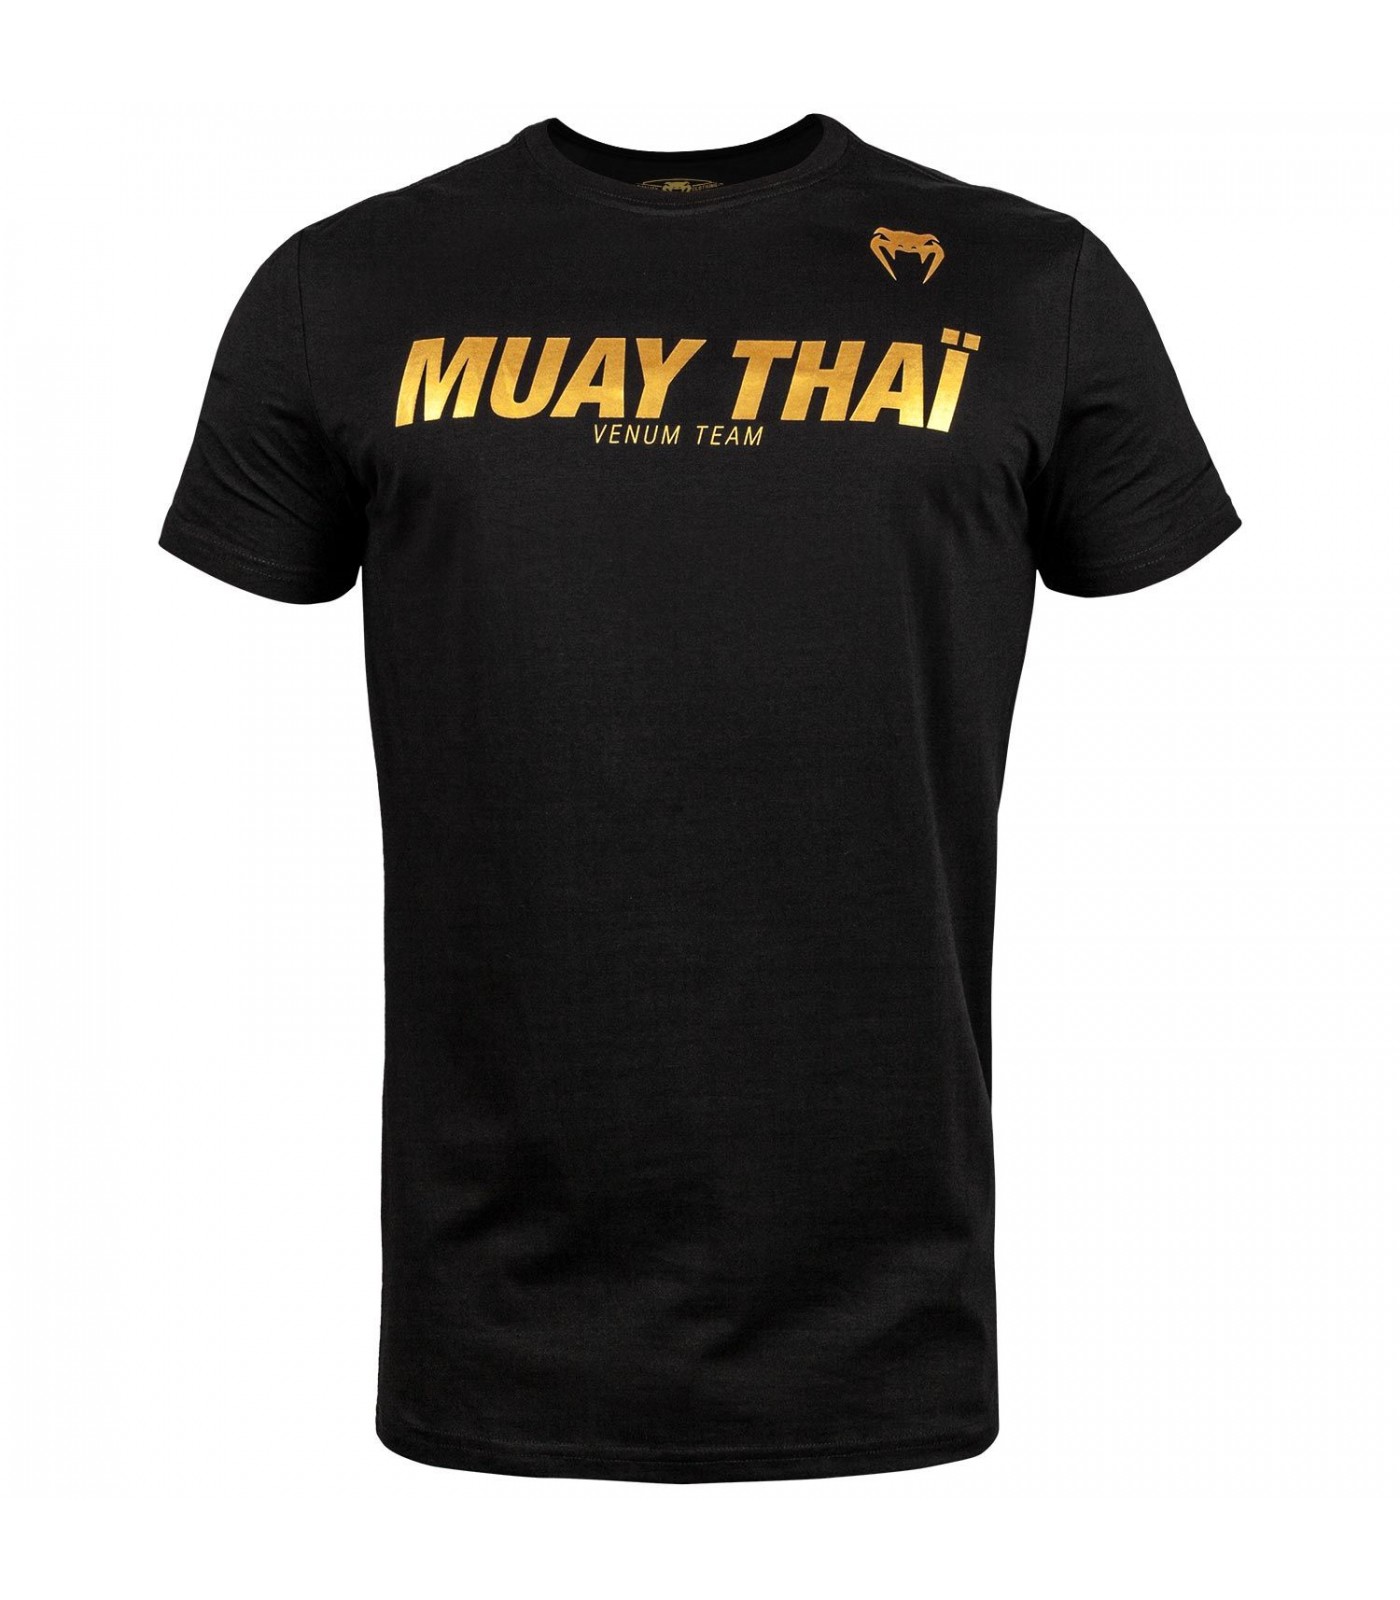 Тениска - Venum Muay Thai VT T-shirt - Black/Gold​